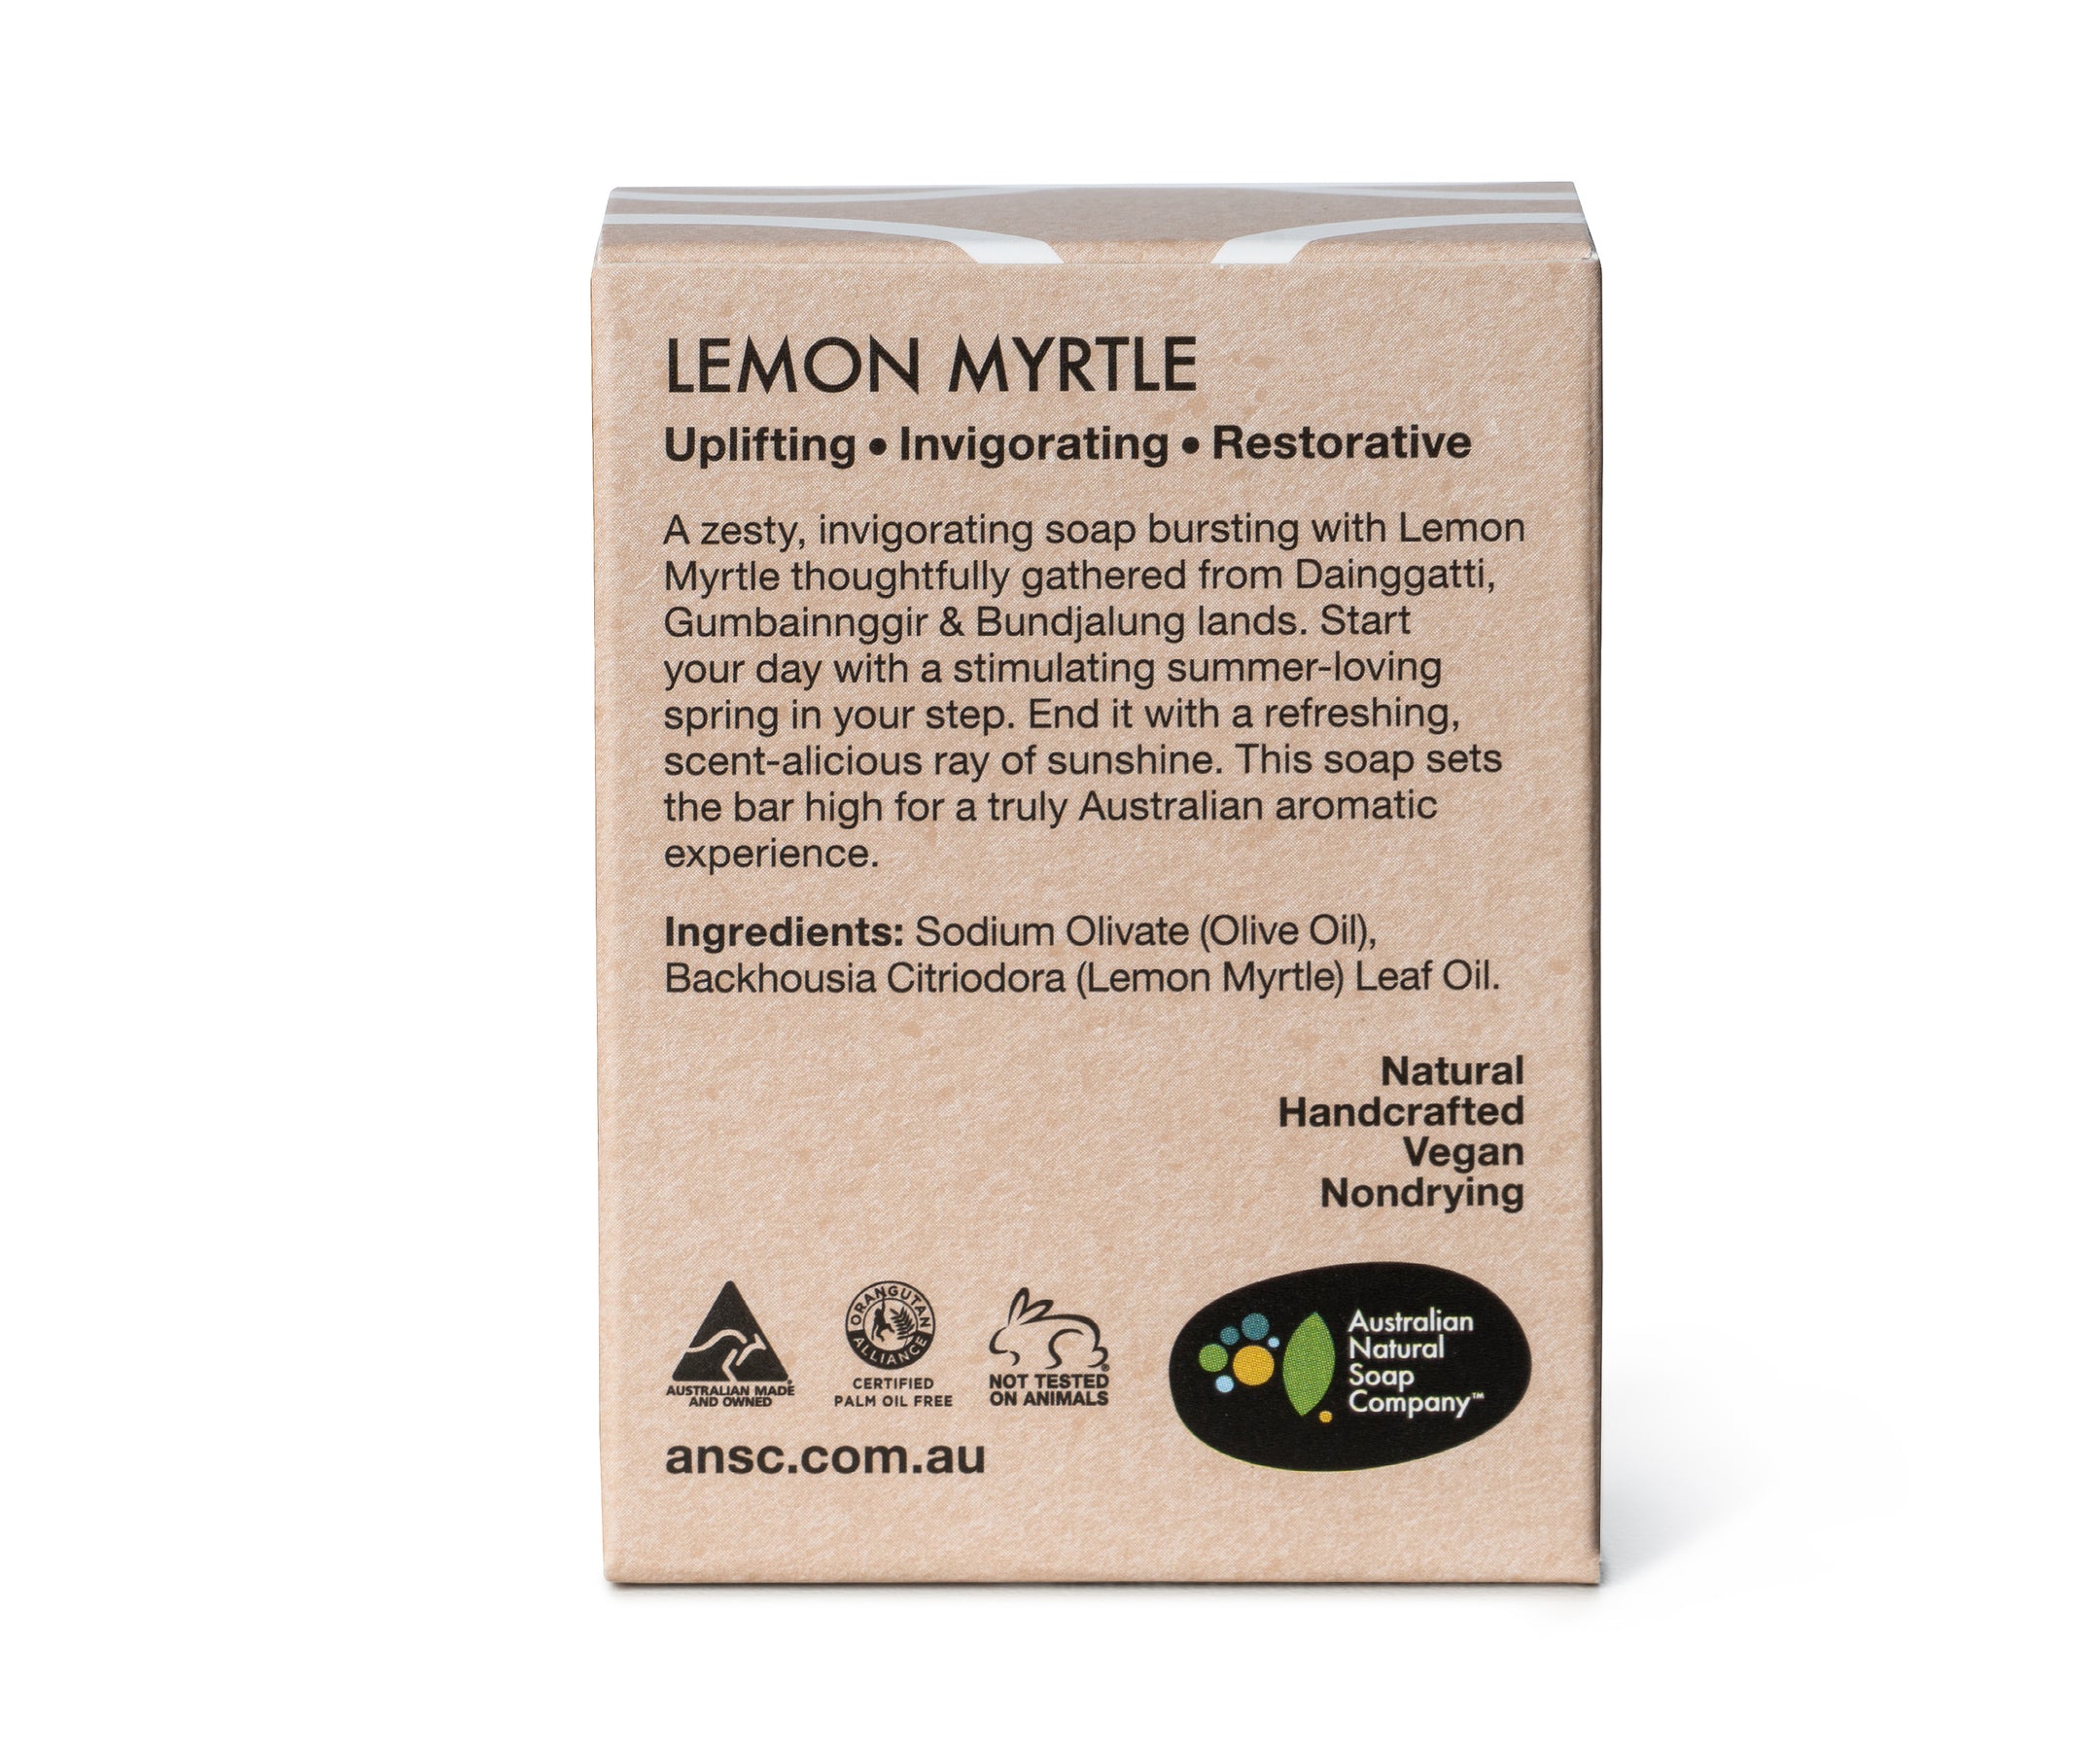 Australian Natural Soap Company handcrafted lemon myrtle hand body bar back of box